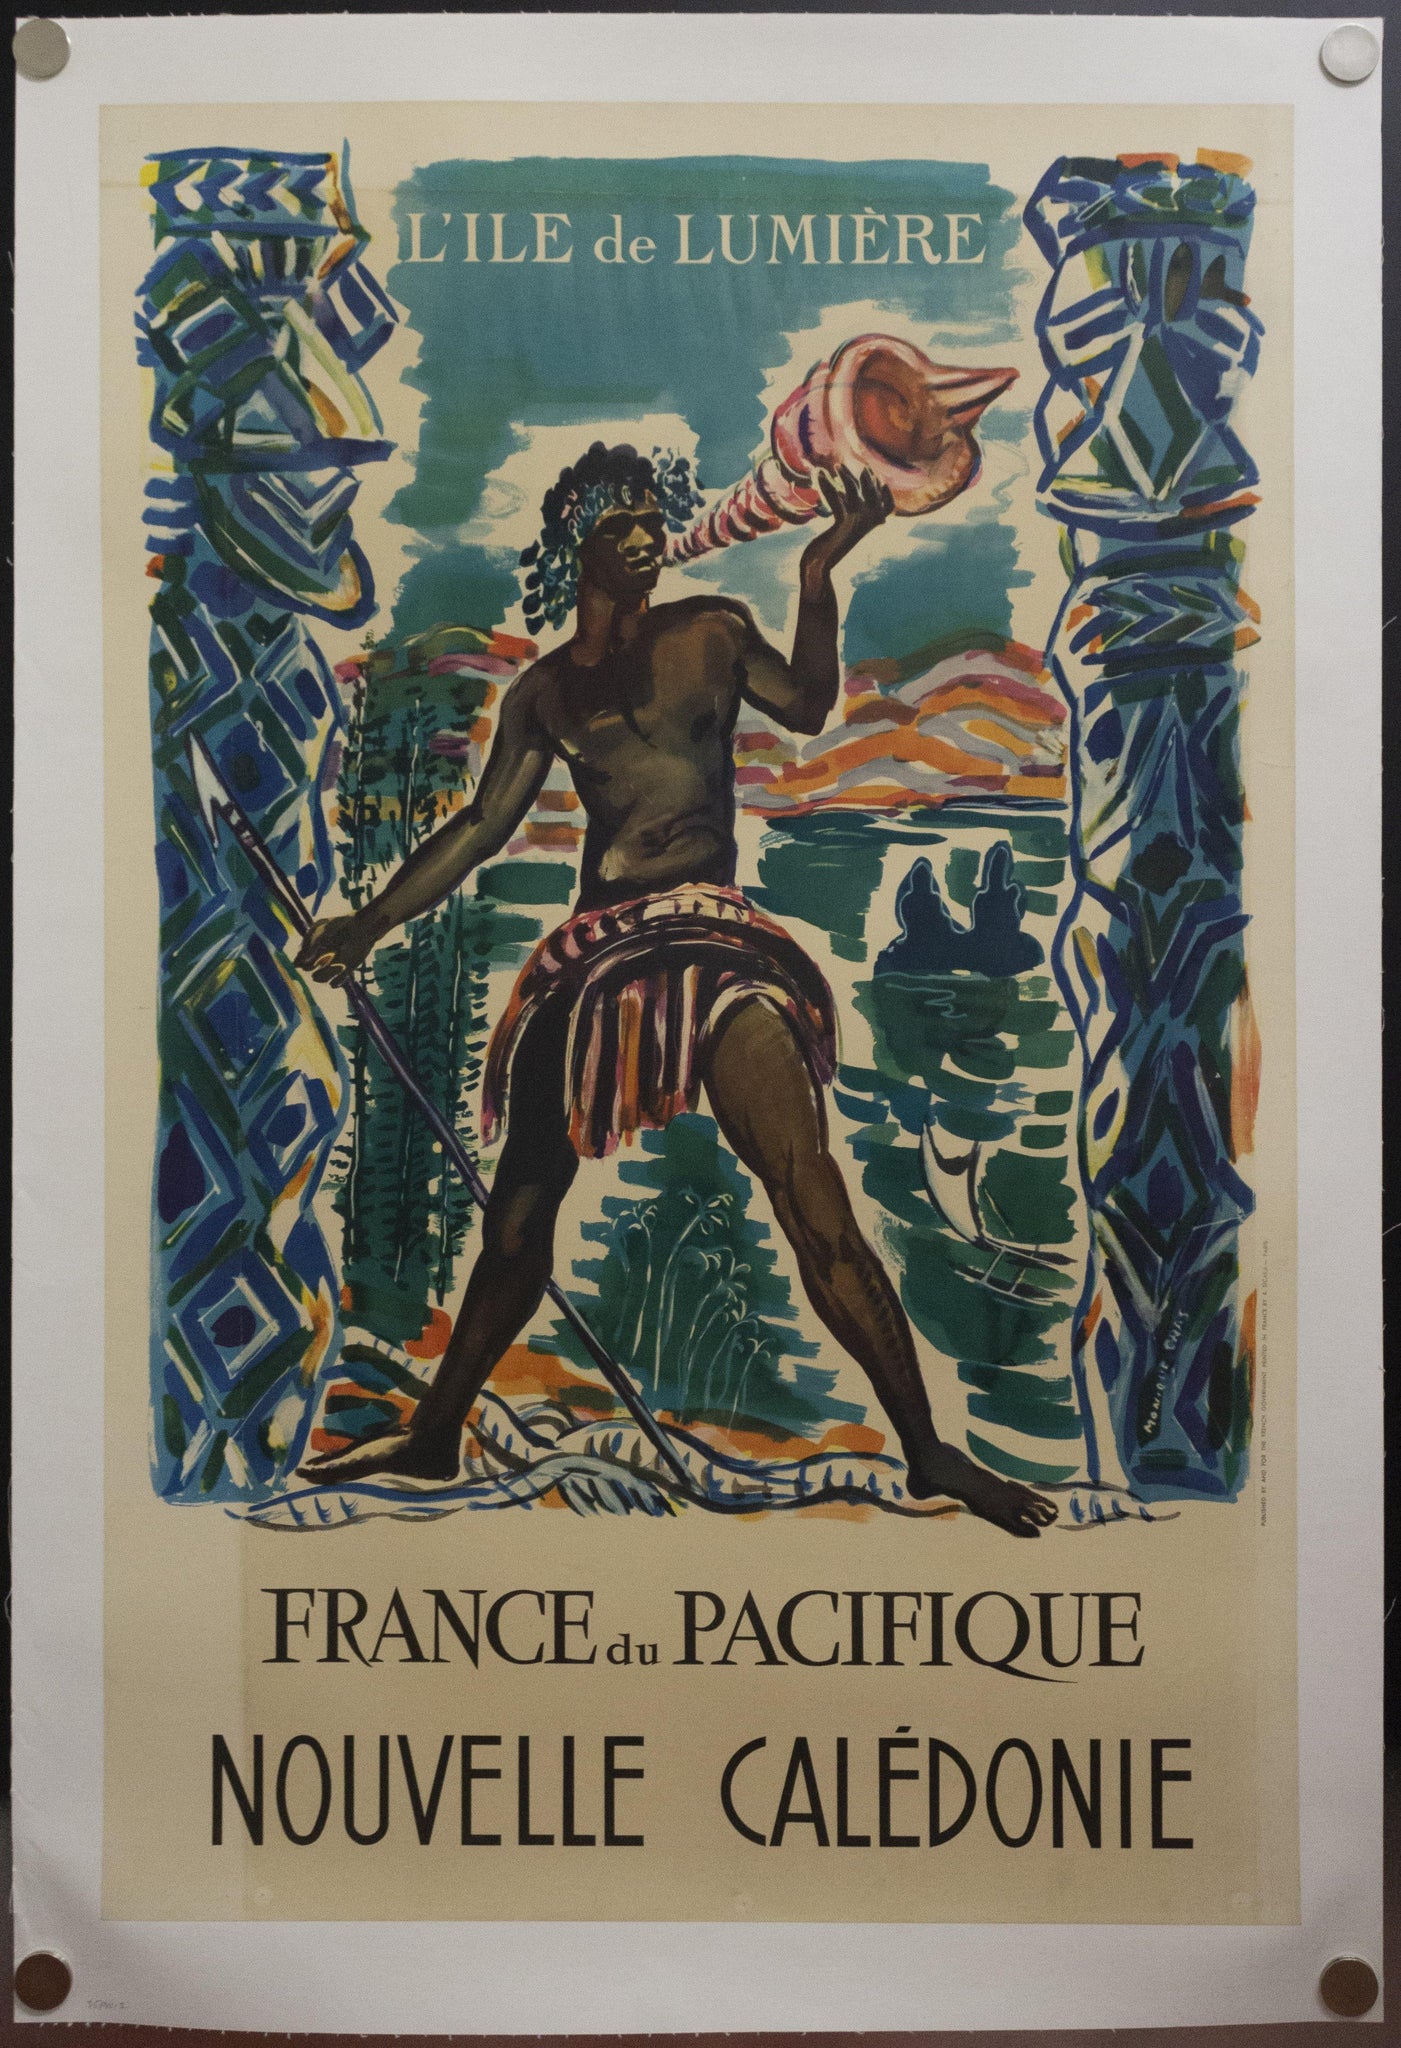 c.1950s Nouvelle Calédonie by Monique Cras New Caledonia South Pacific Travel - Golden Age Posters